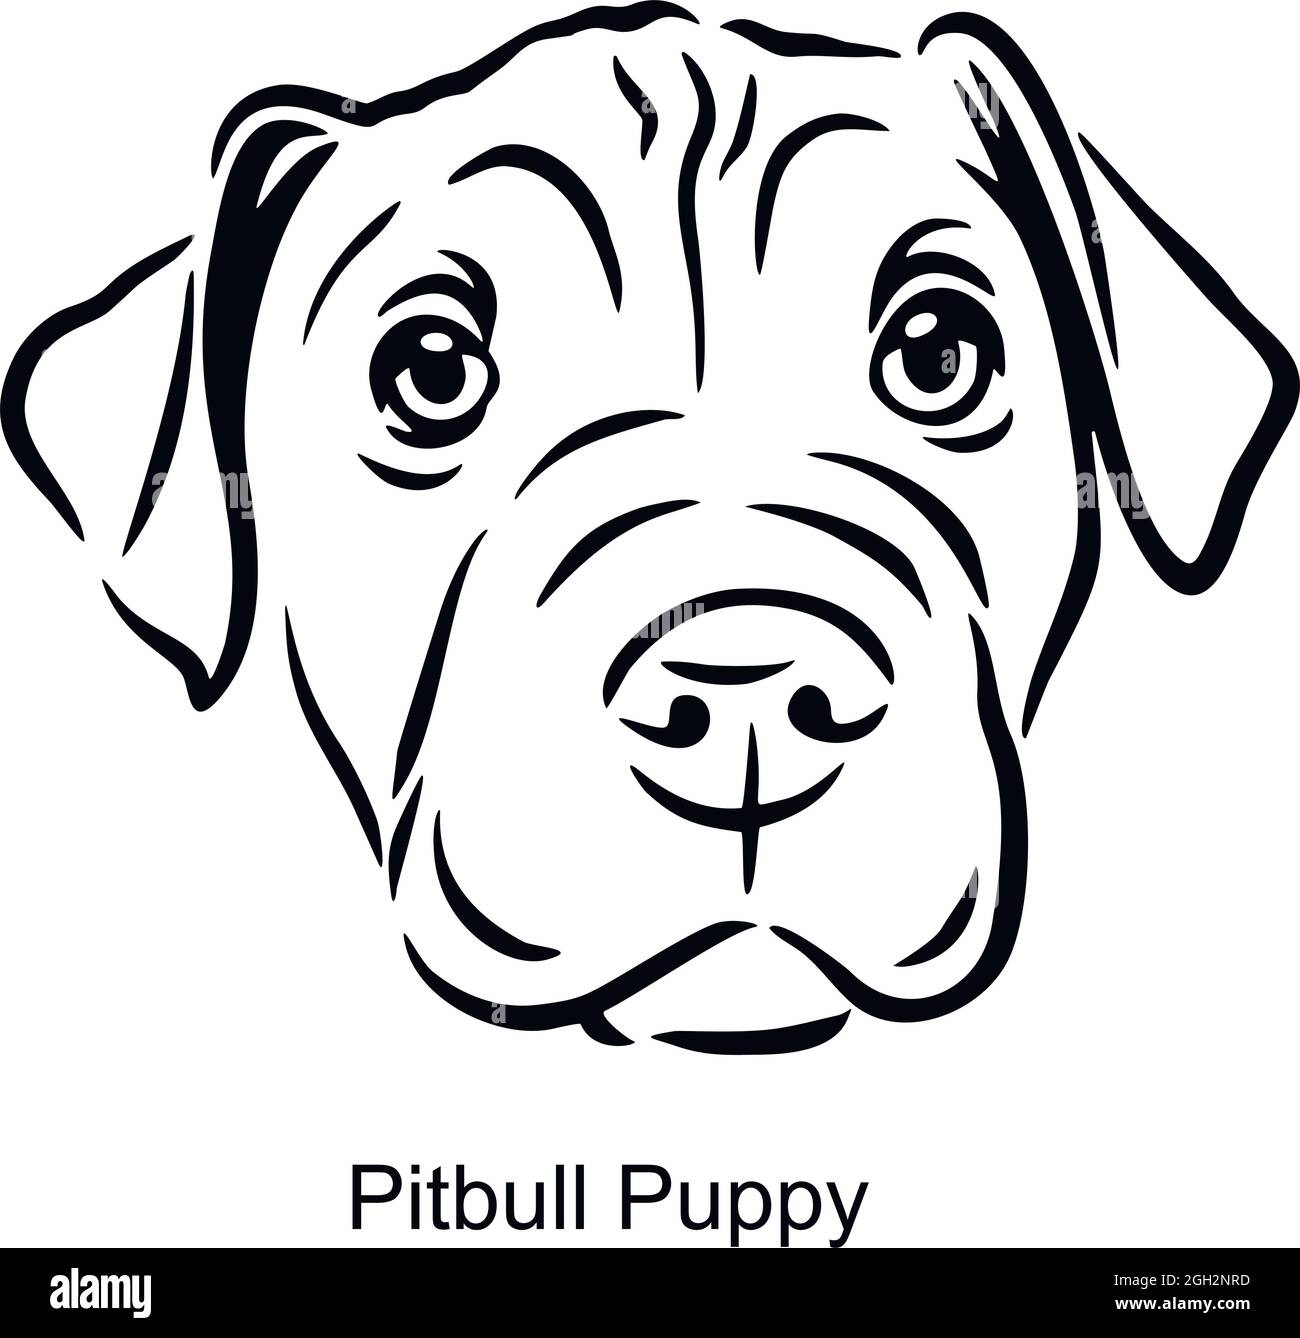 pitbull puppy drawing